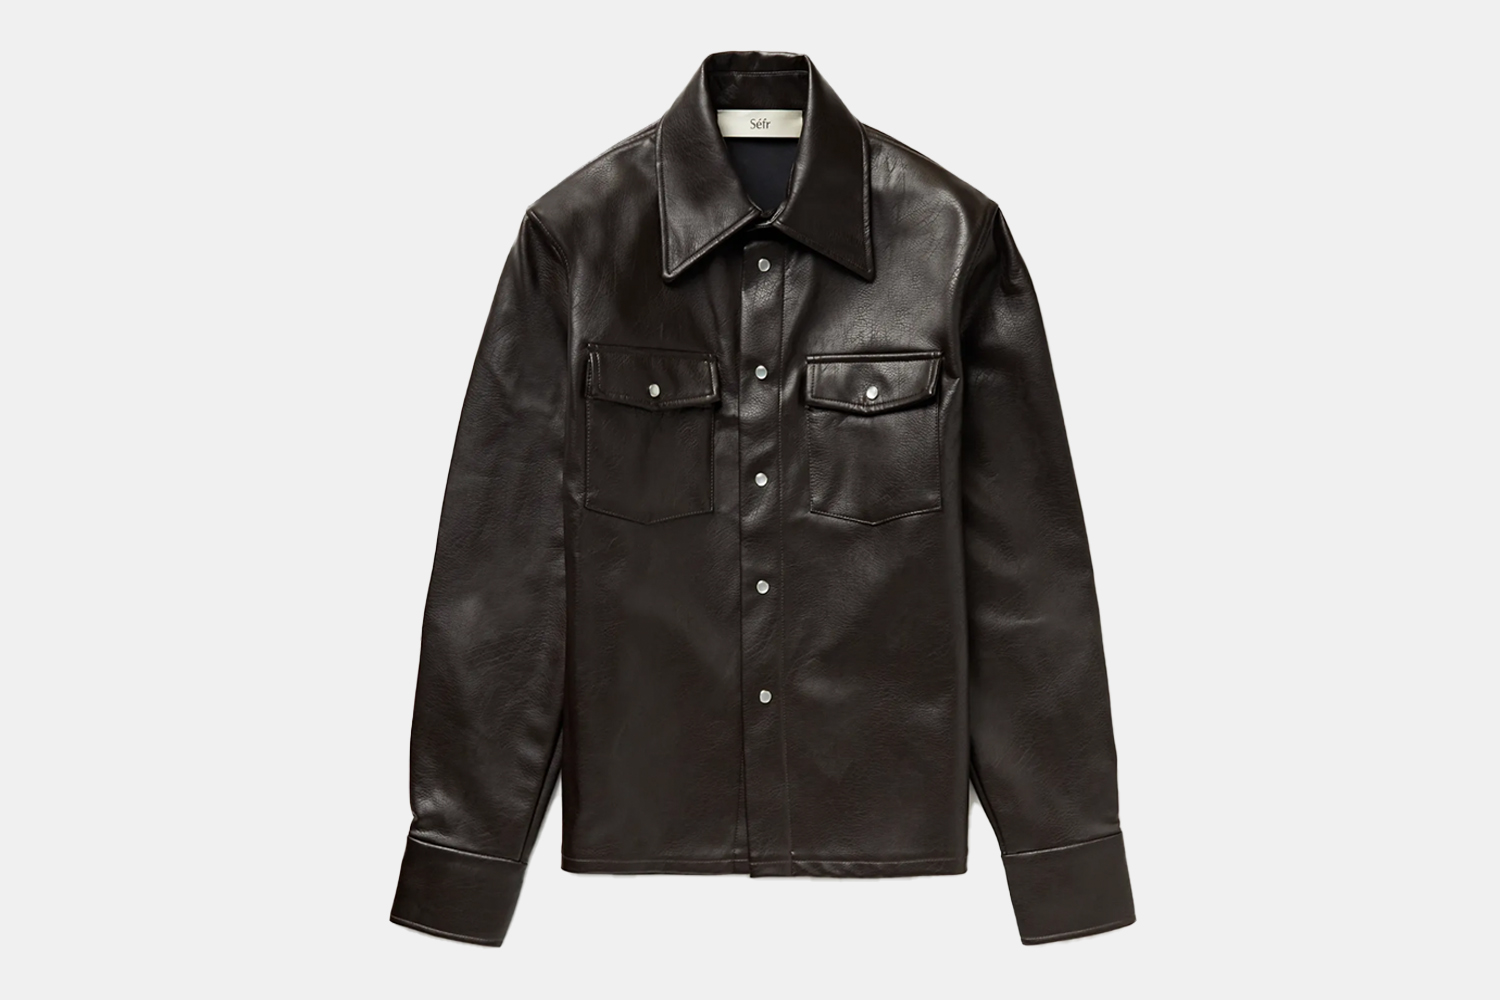 a leather shirt jacket